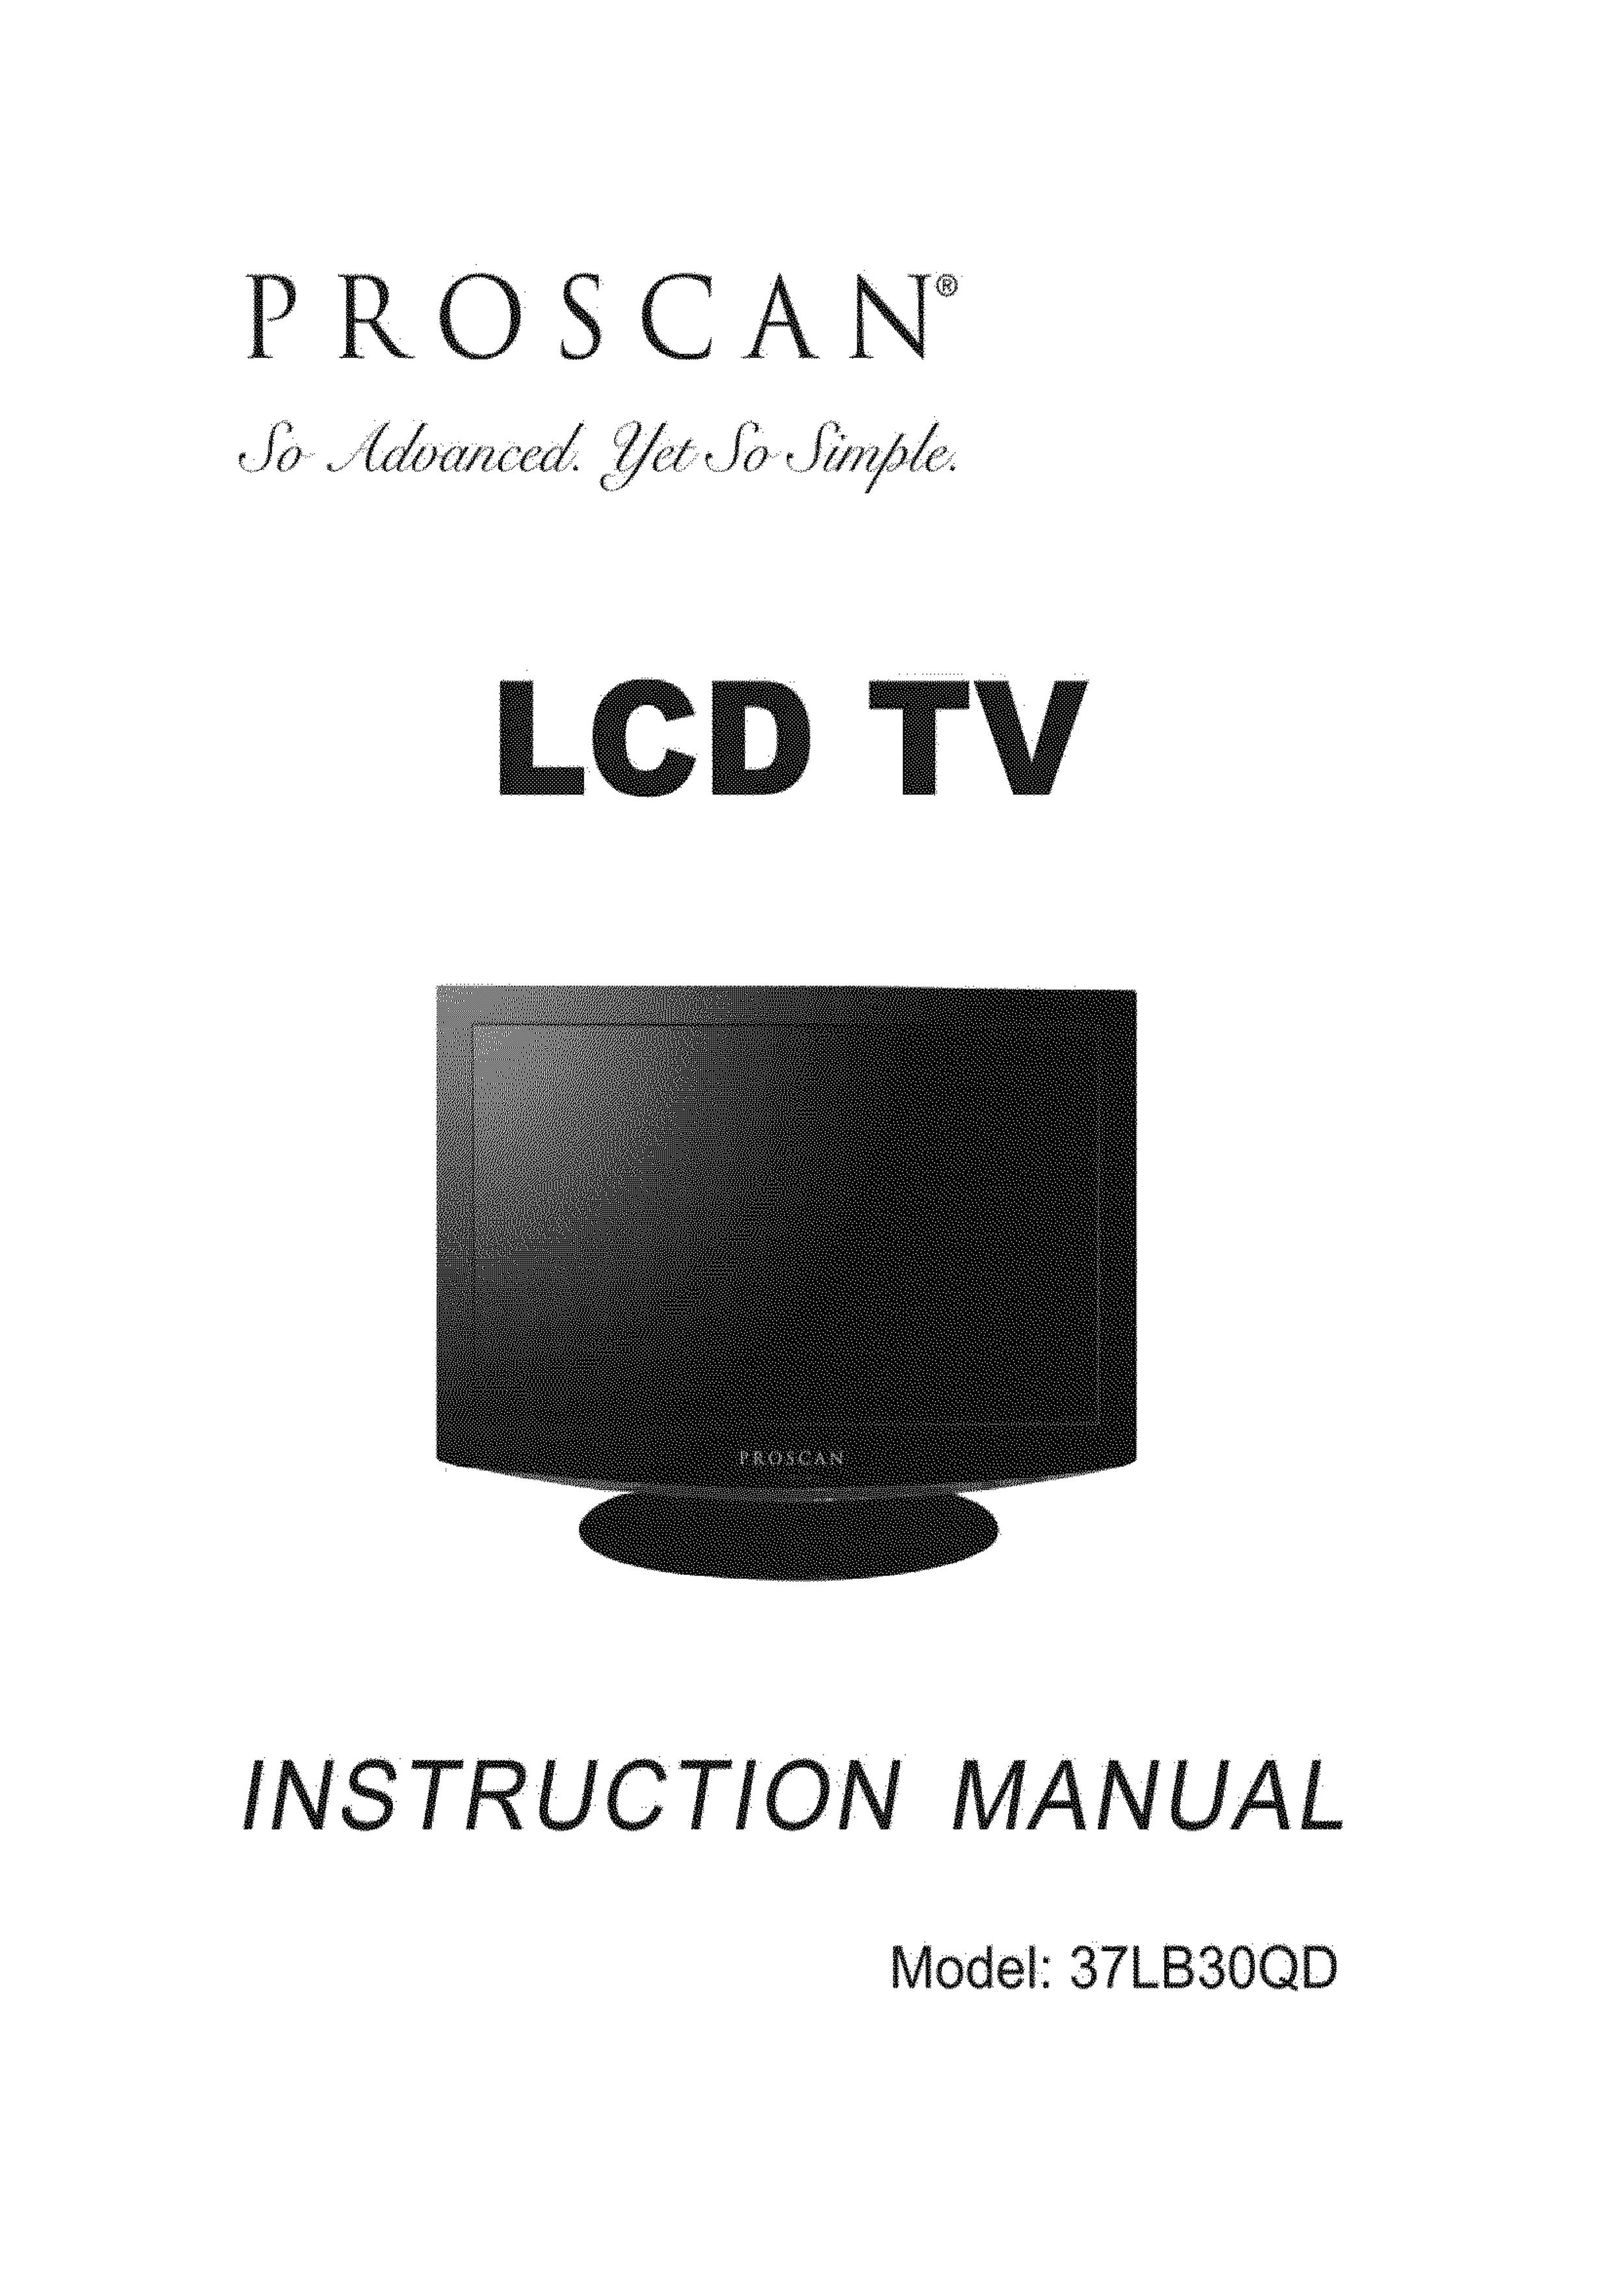 ProScan 37LB30QD Flat Panel Television User Manual